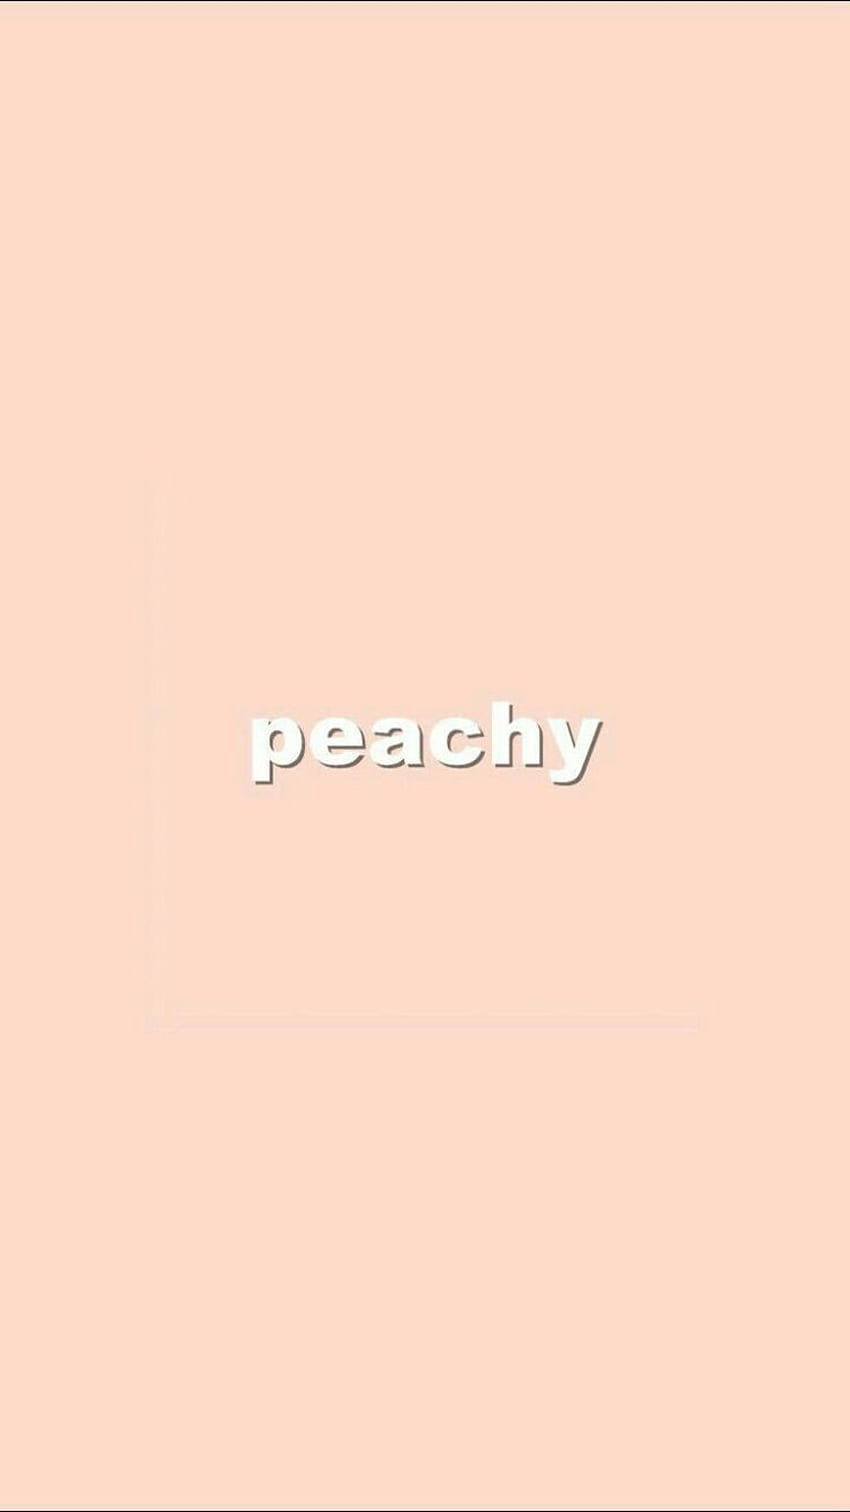 Peach aesthetic background with the word peachy - Peach